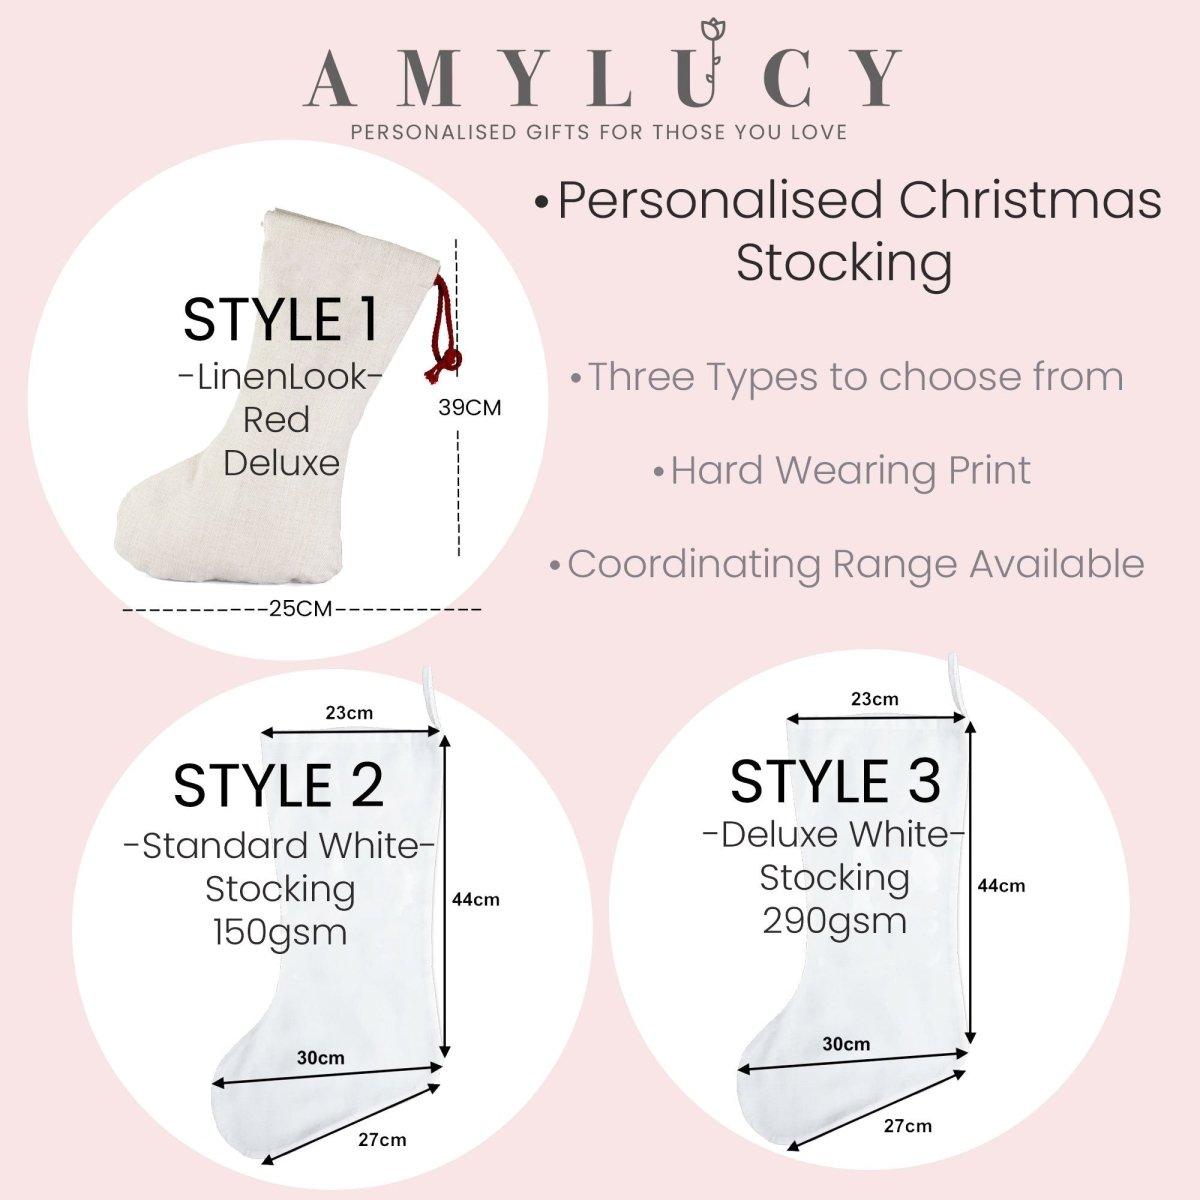 Personalised Santa Stocking, Personalised Christmas Stockings, Family Christmas Stockings, Name Stockings, Christmas Family Decorations - Amy Lucy